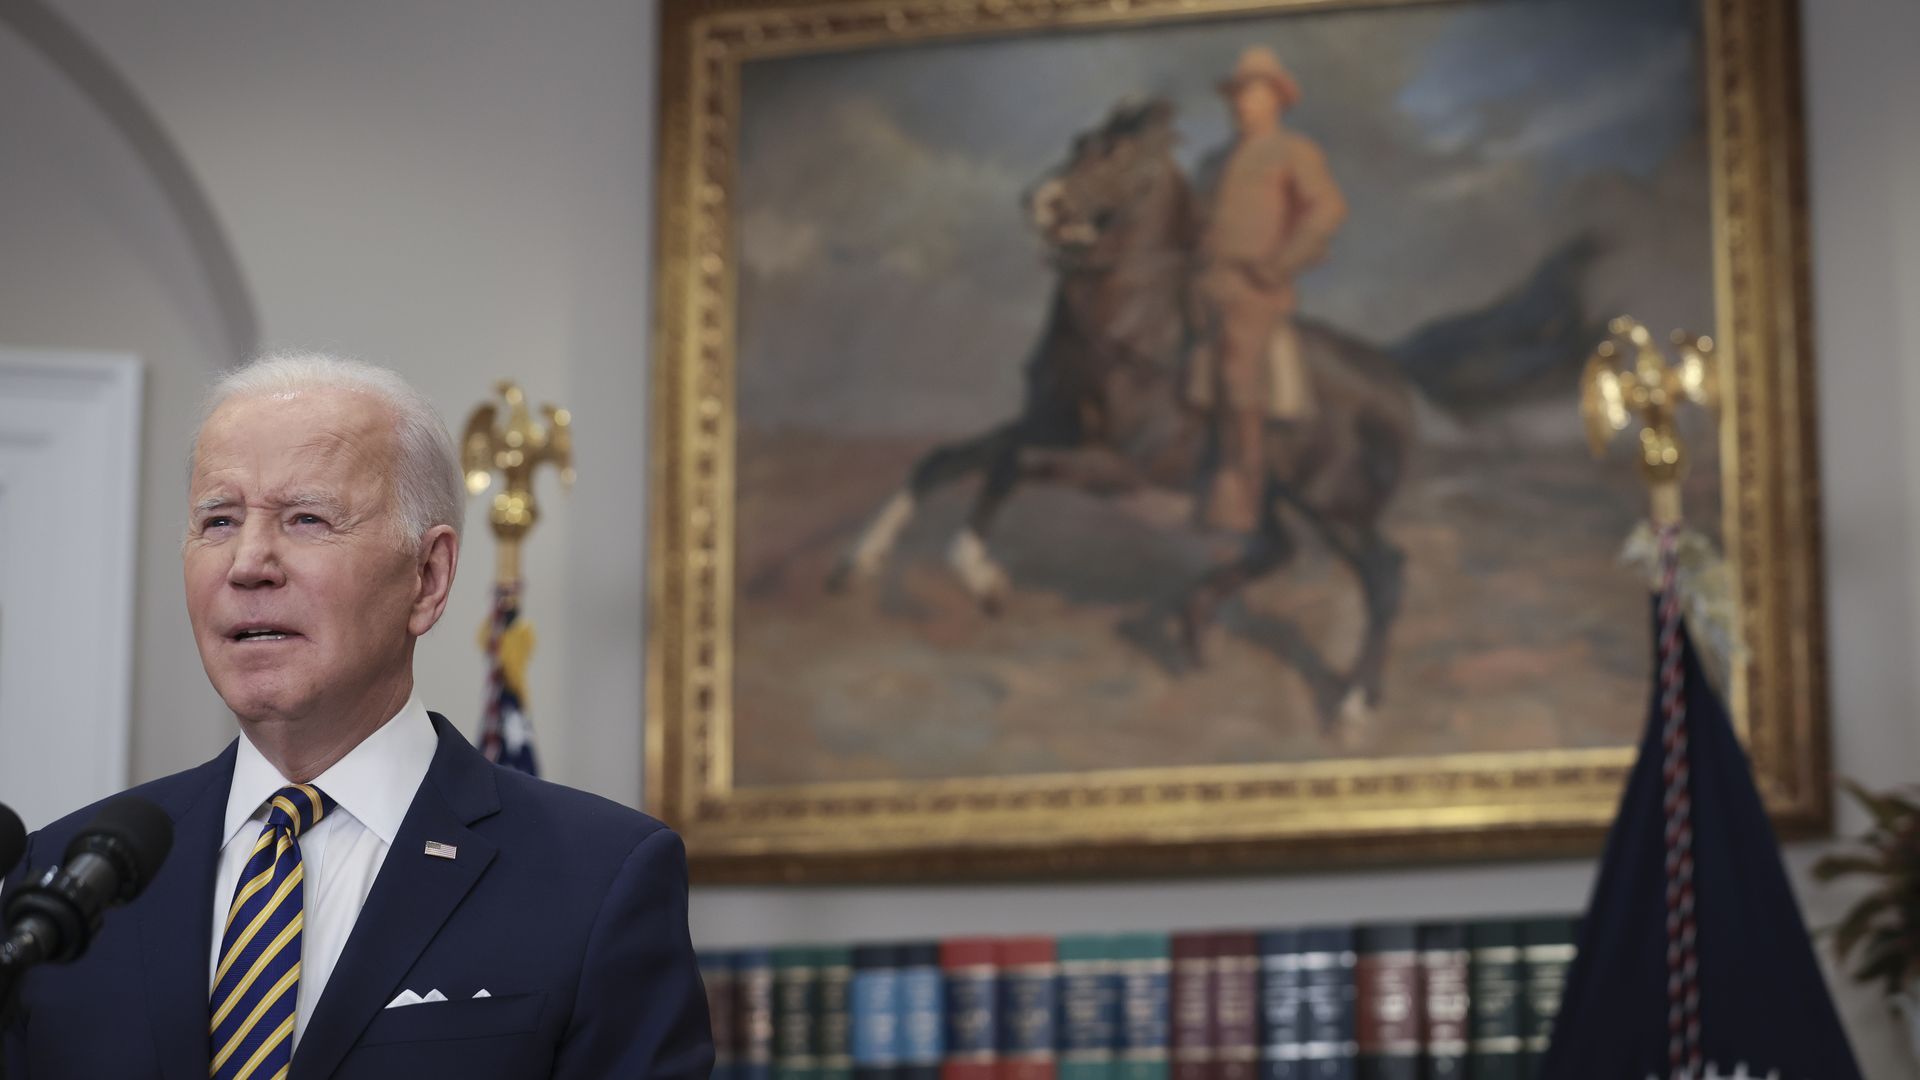 President Biden is seen speaking beneath a portrait of Teddy Roosevelt.